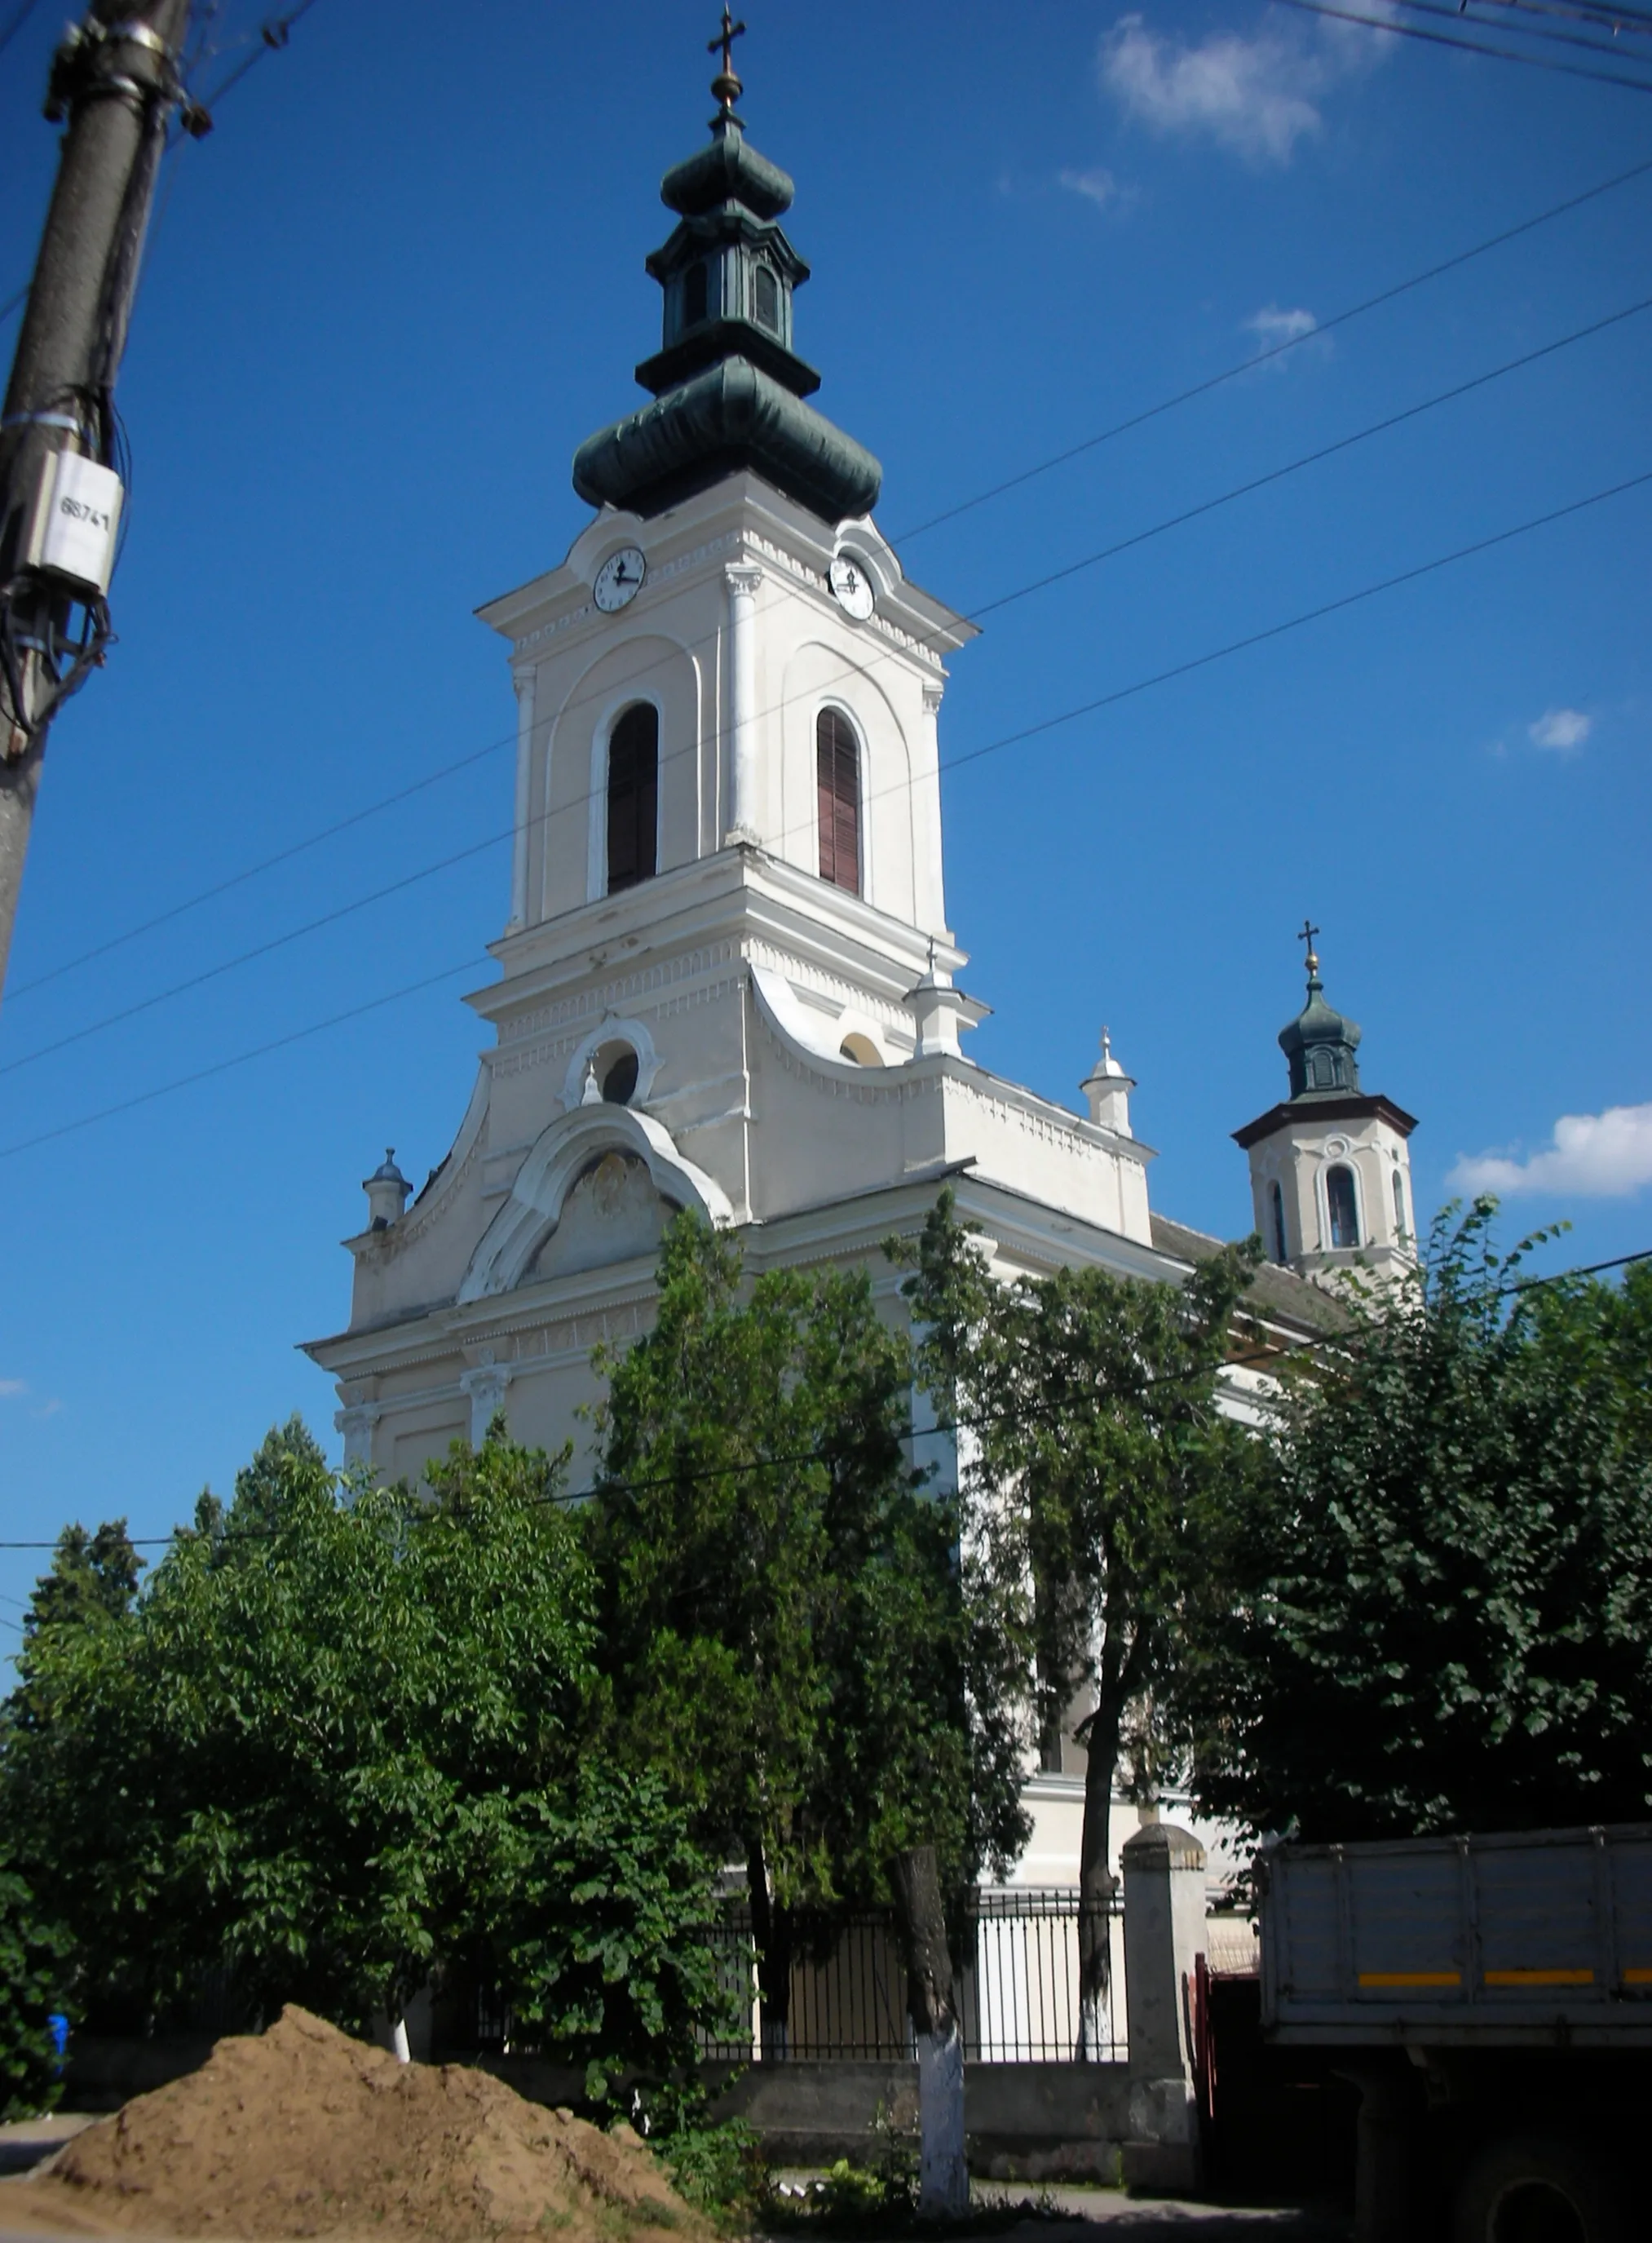 Photo showing: the Romanian Orthodox church in Ciacova, Romania